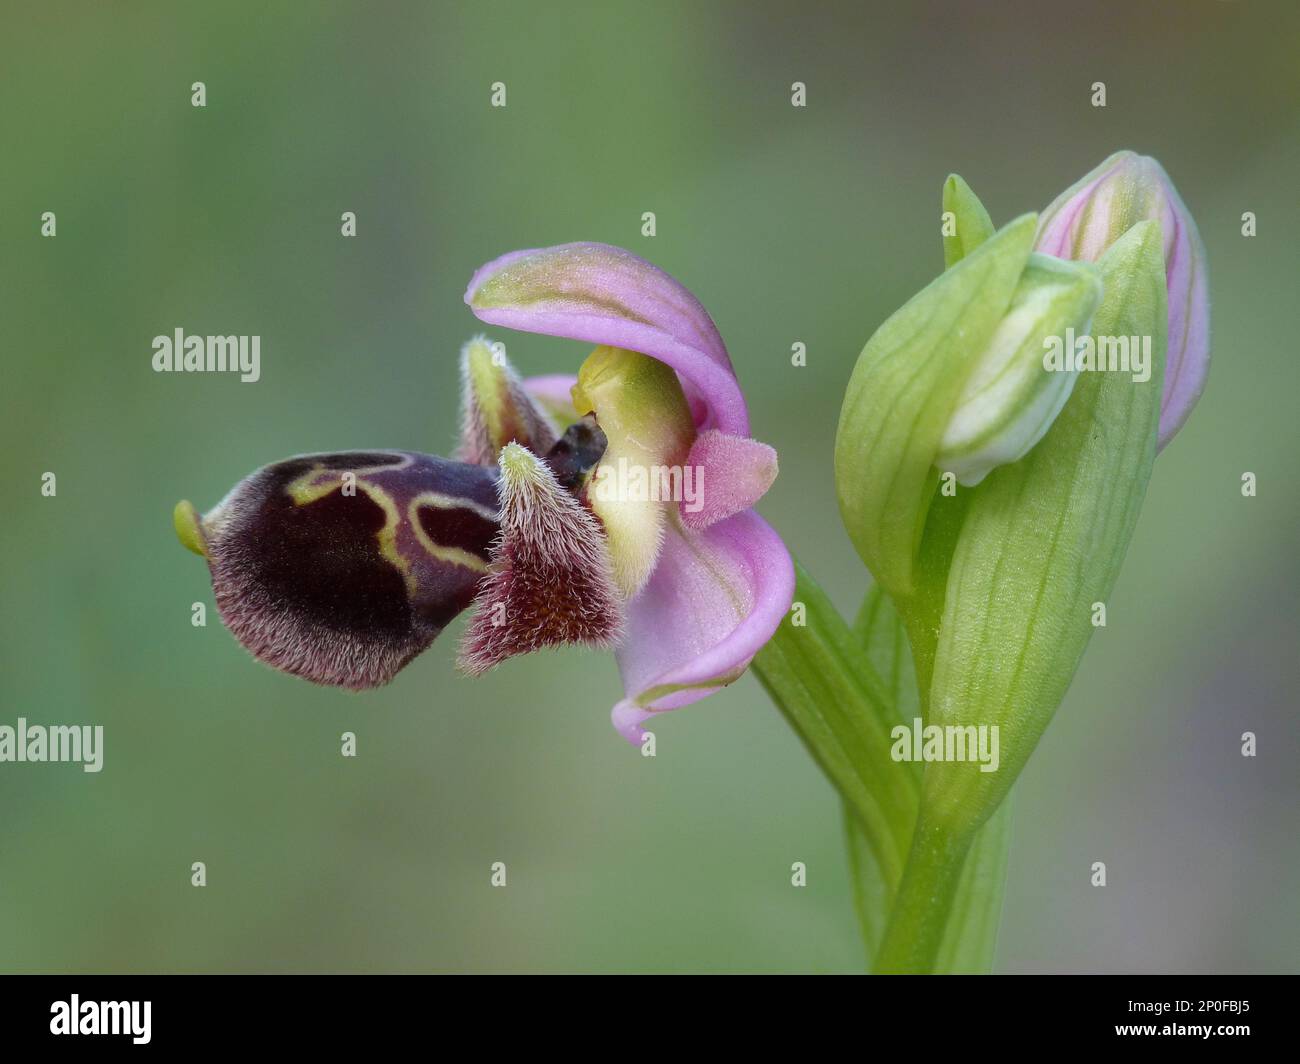 Umbilicata, Carmel's Ragwort, Attic Ragwort, Orchids Umbilicata gros plan de fleur, Chypre, mars 2015 Banque D'Images